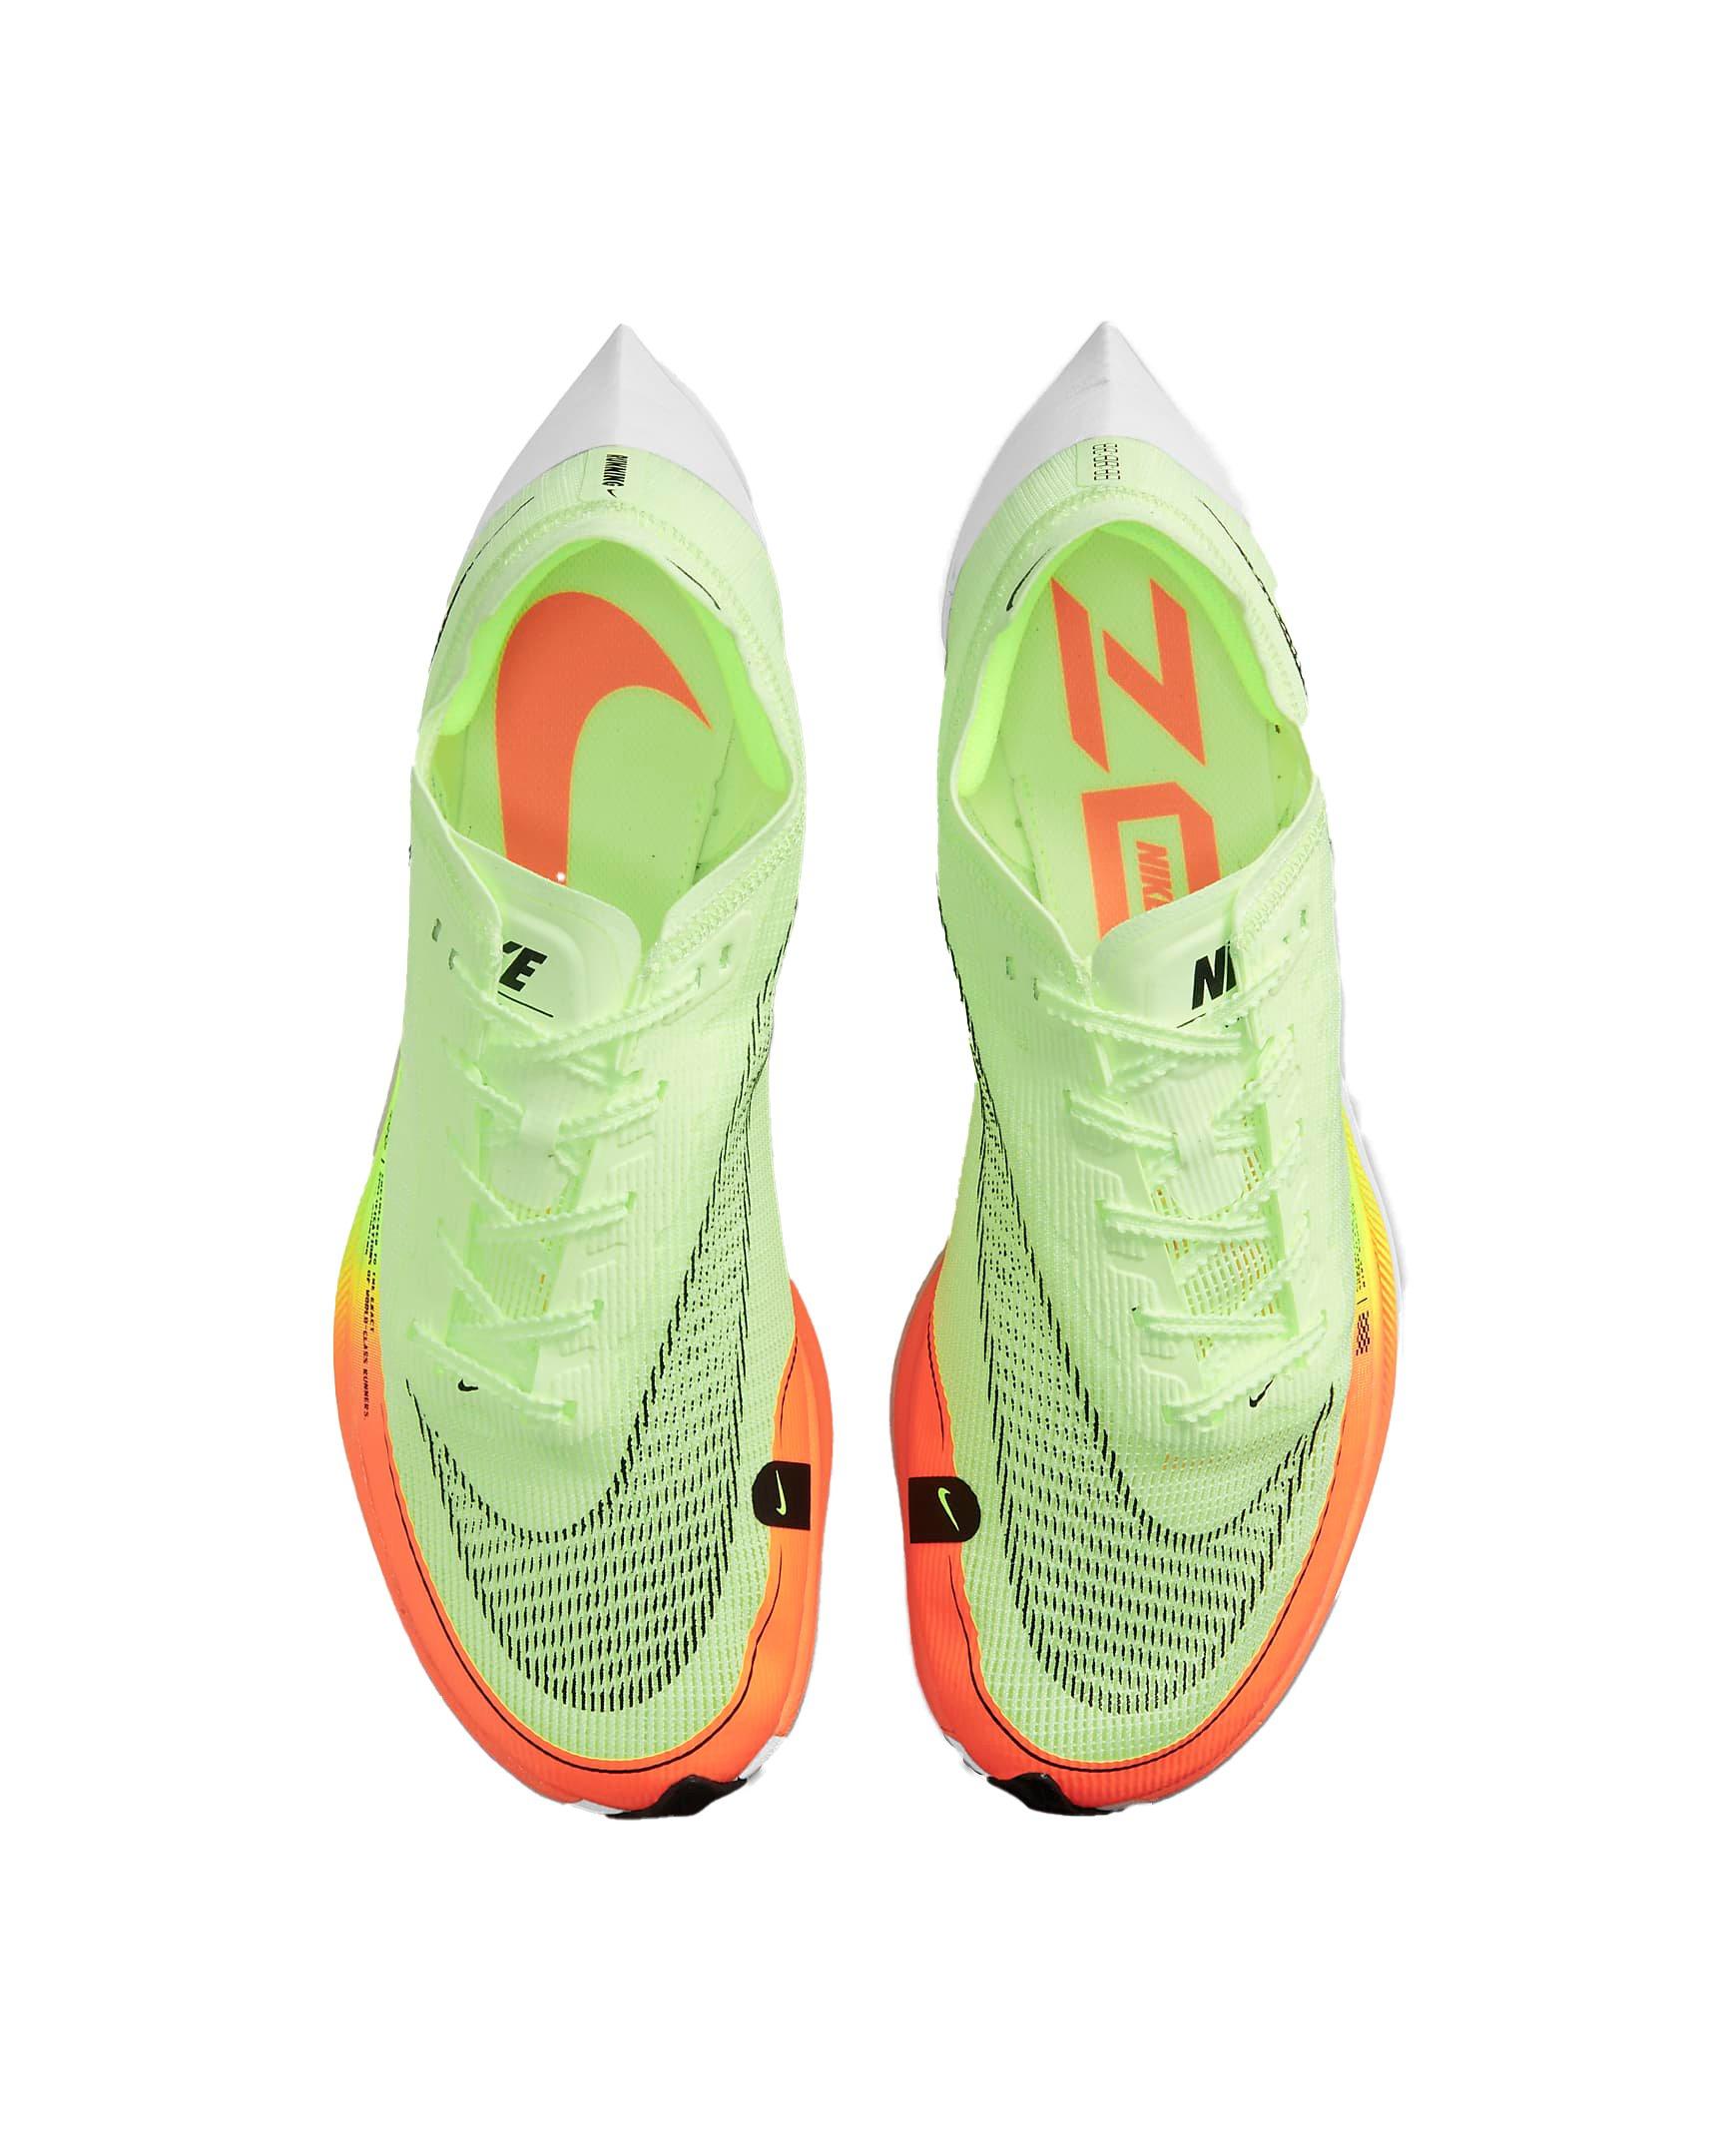 Dependiente factor mantequilla Nike ZoomX Vaporfly Next% 2 "Barely Volt/Hyper Orange/Volt/Black" Men's  Running Shoe